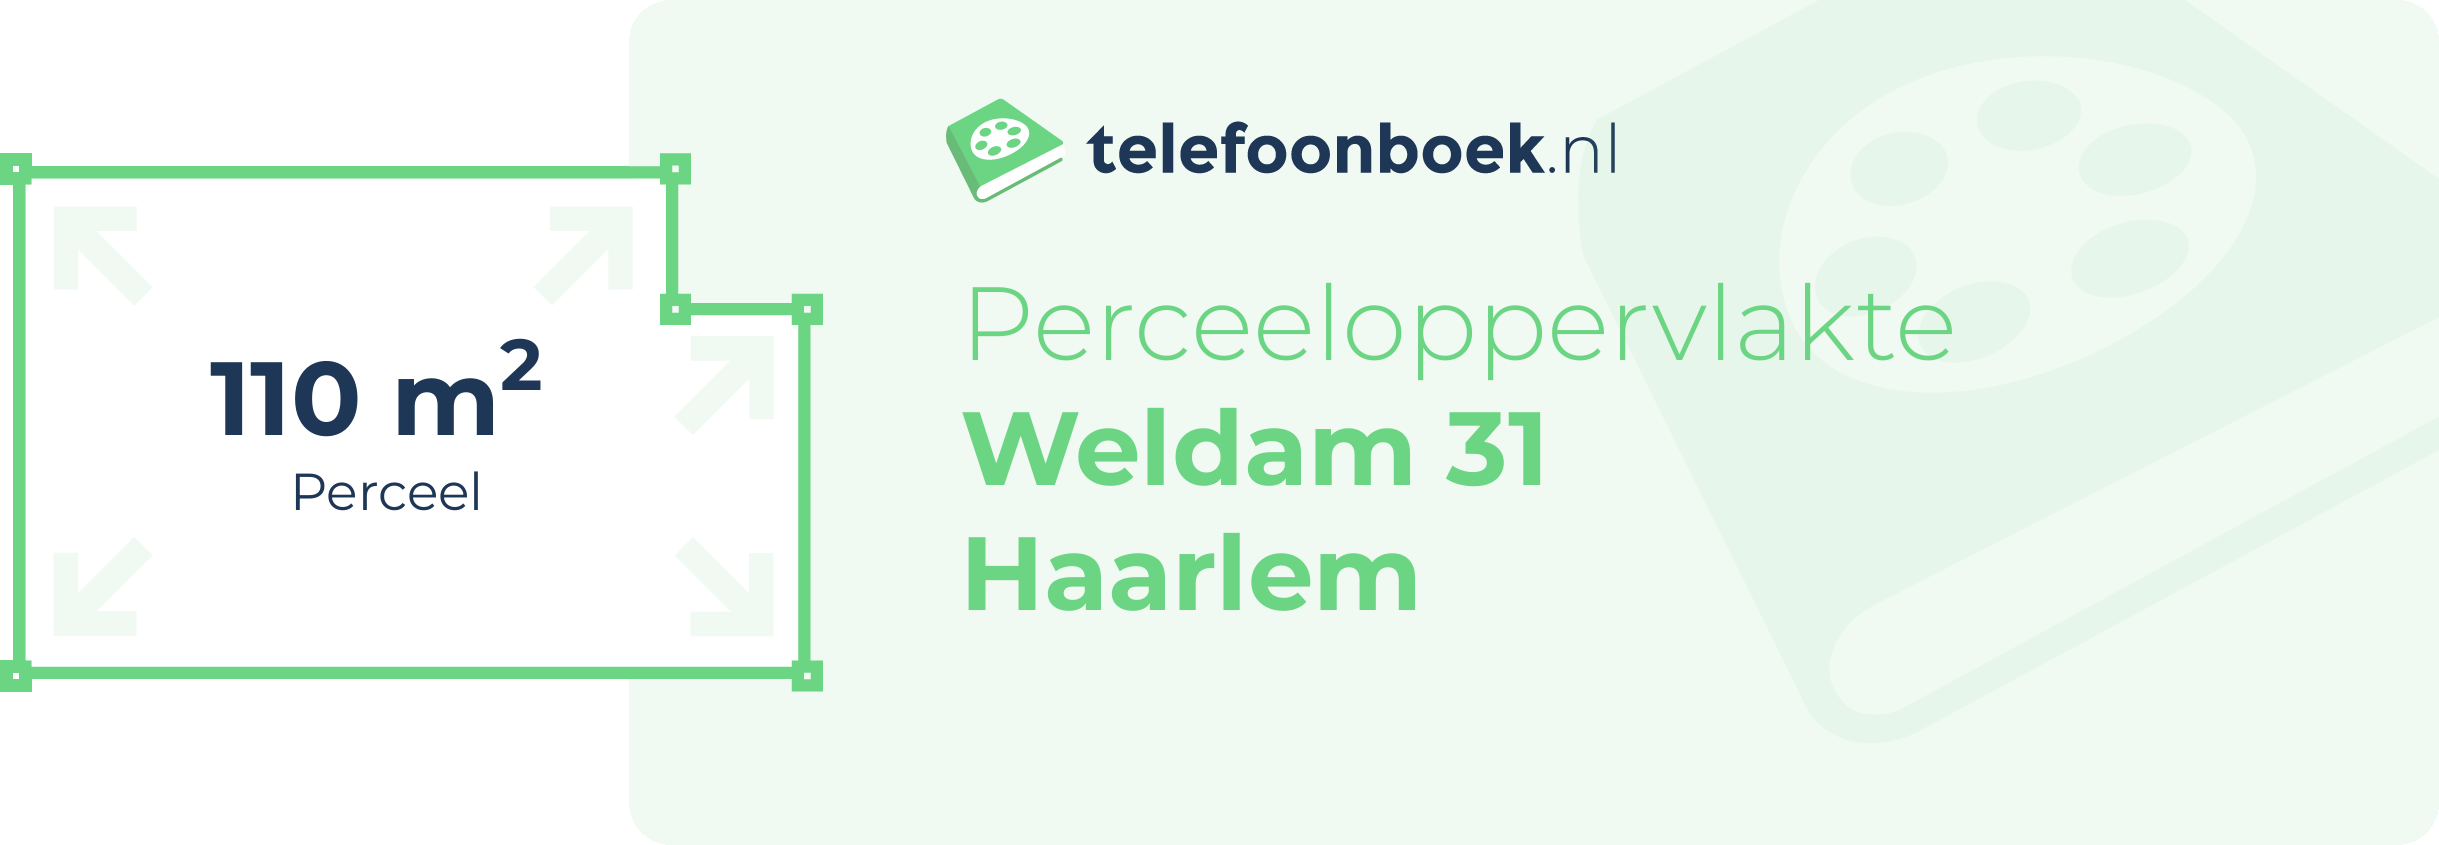 Perceeloppervlakte Weldam 31 Haarlem